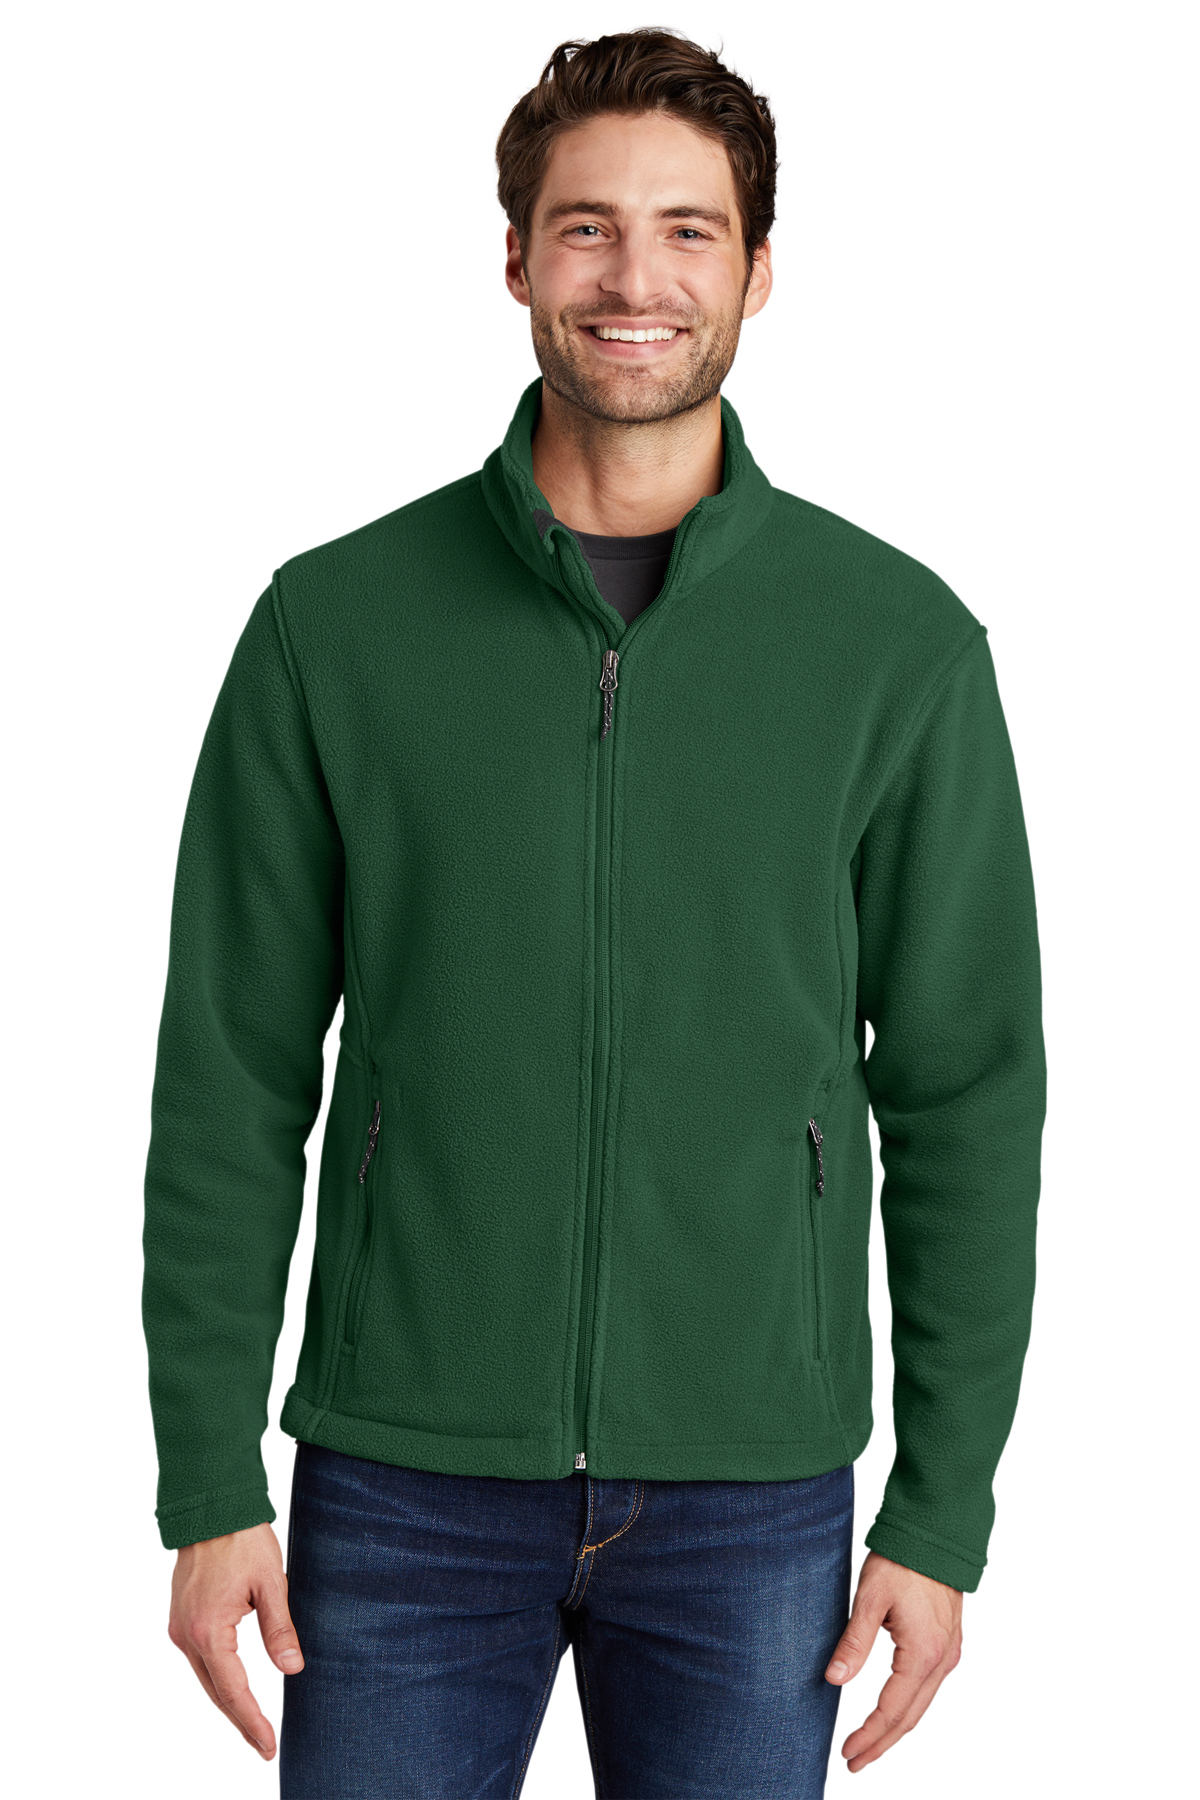 Port Authority Value Fleece Jacket | Product | SanMar